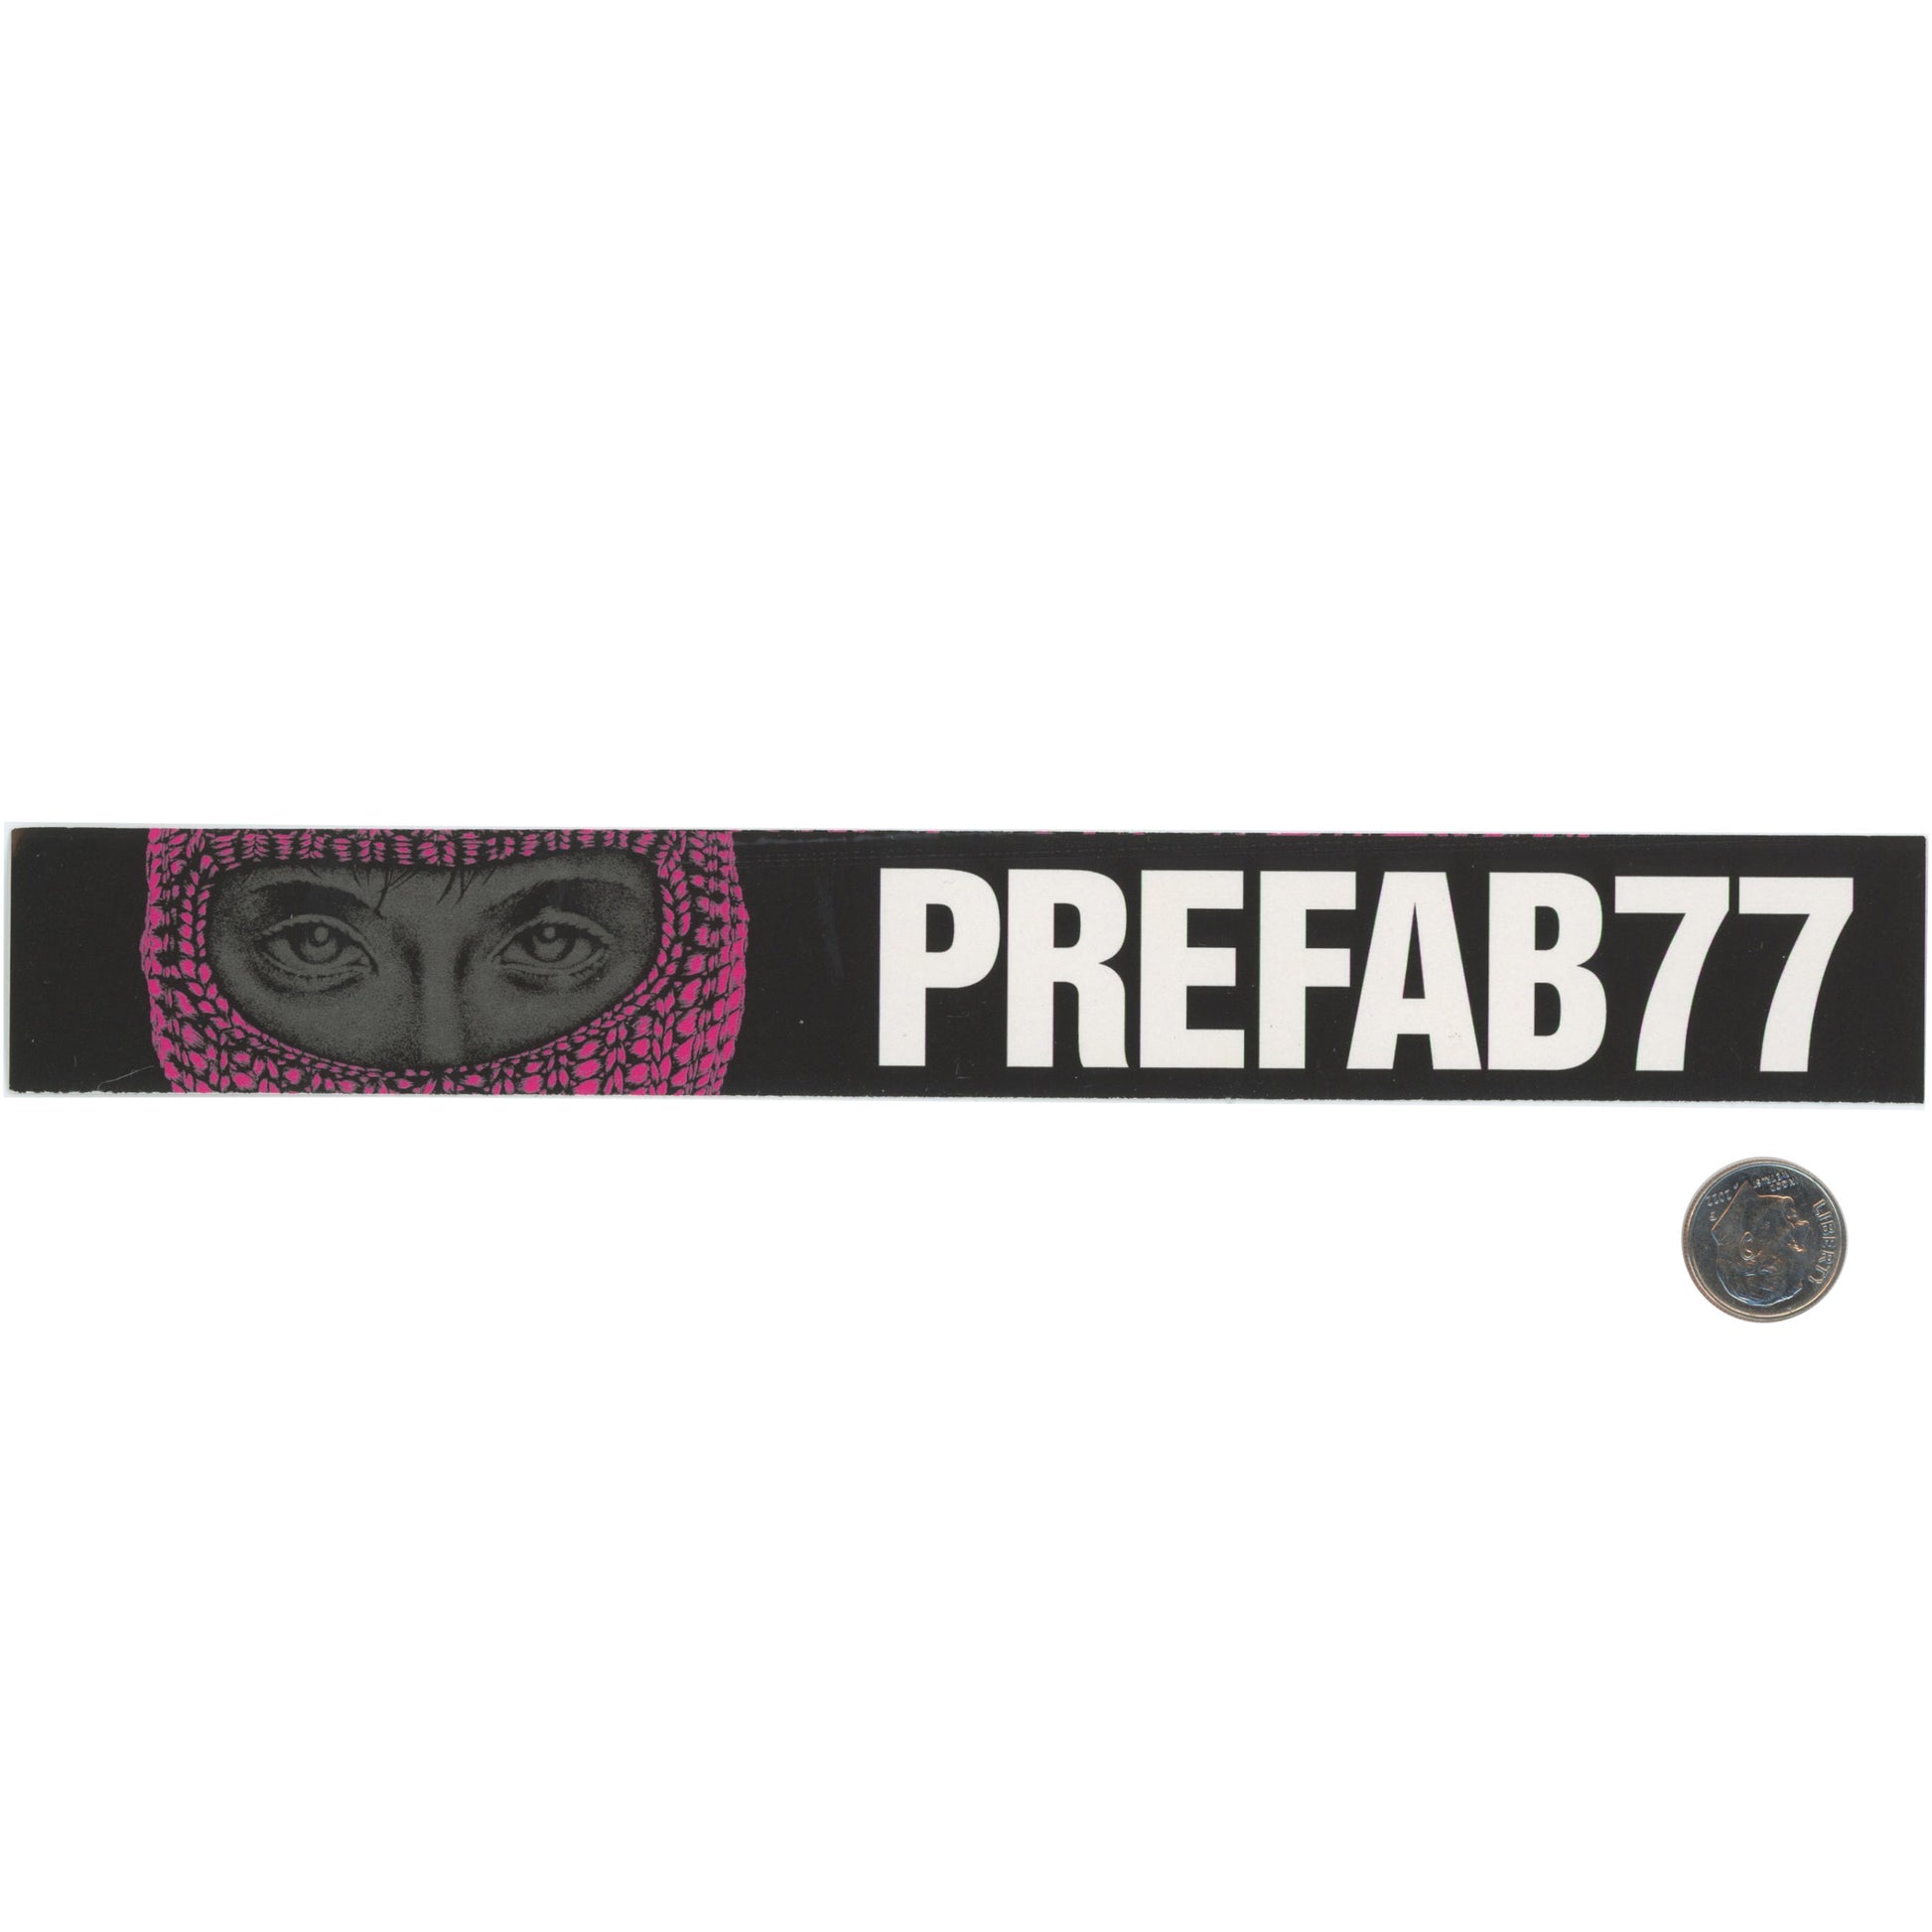 PREFAB77 Heist Pink Black Sticker Large with dime